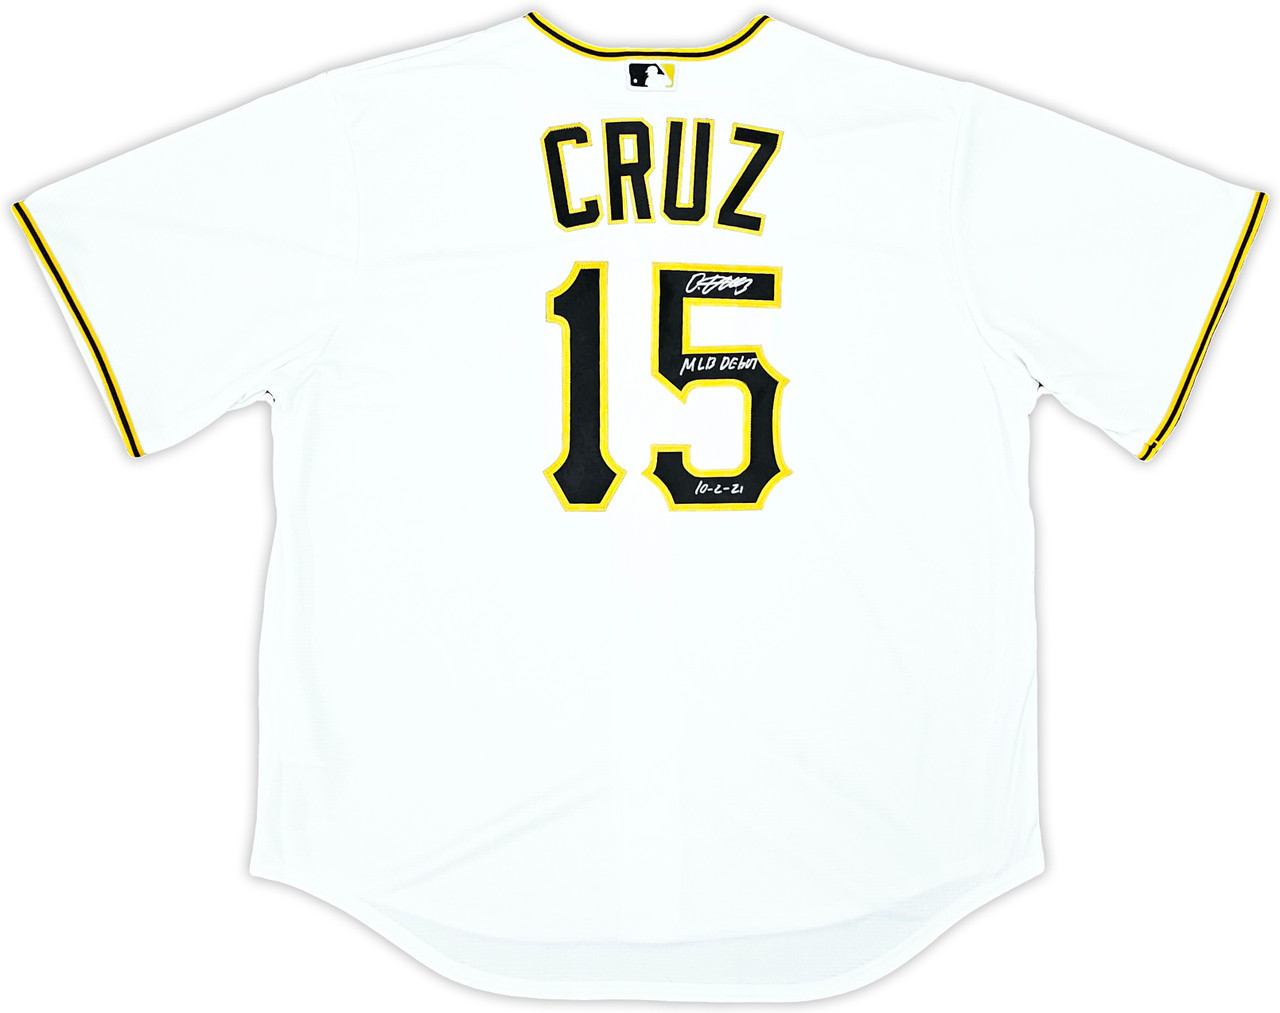 Pittsburgh Pirates Oneil Cruz Autographed White Nike Jersey Size XL MLB  Debut 10-2-21 Beckett BAS QR Stock #220603